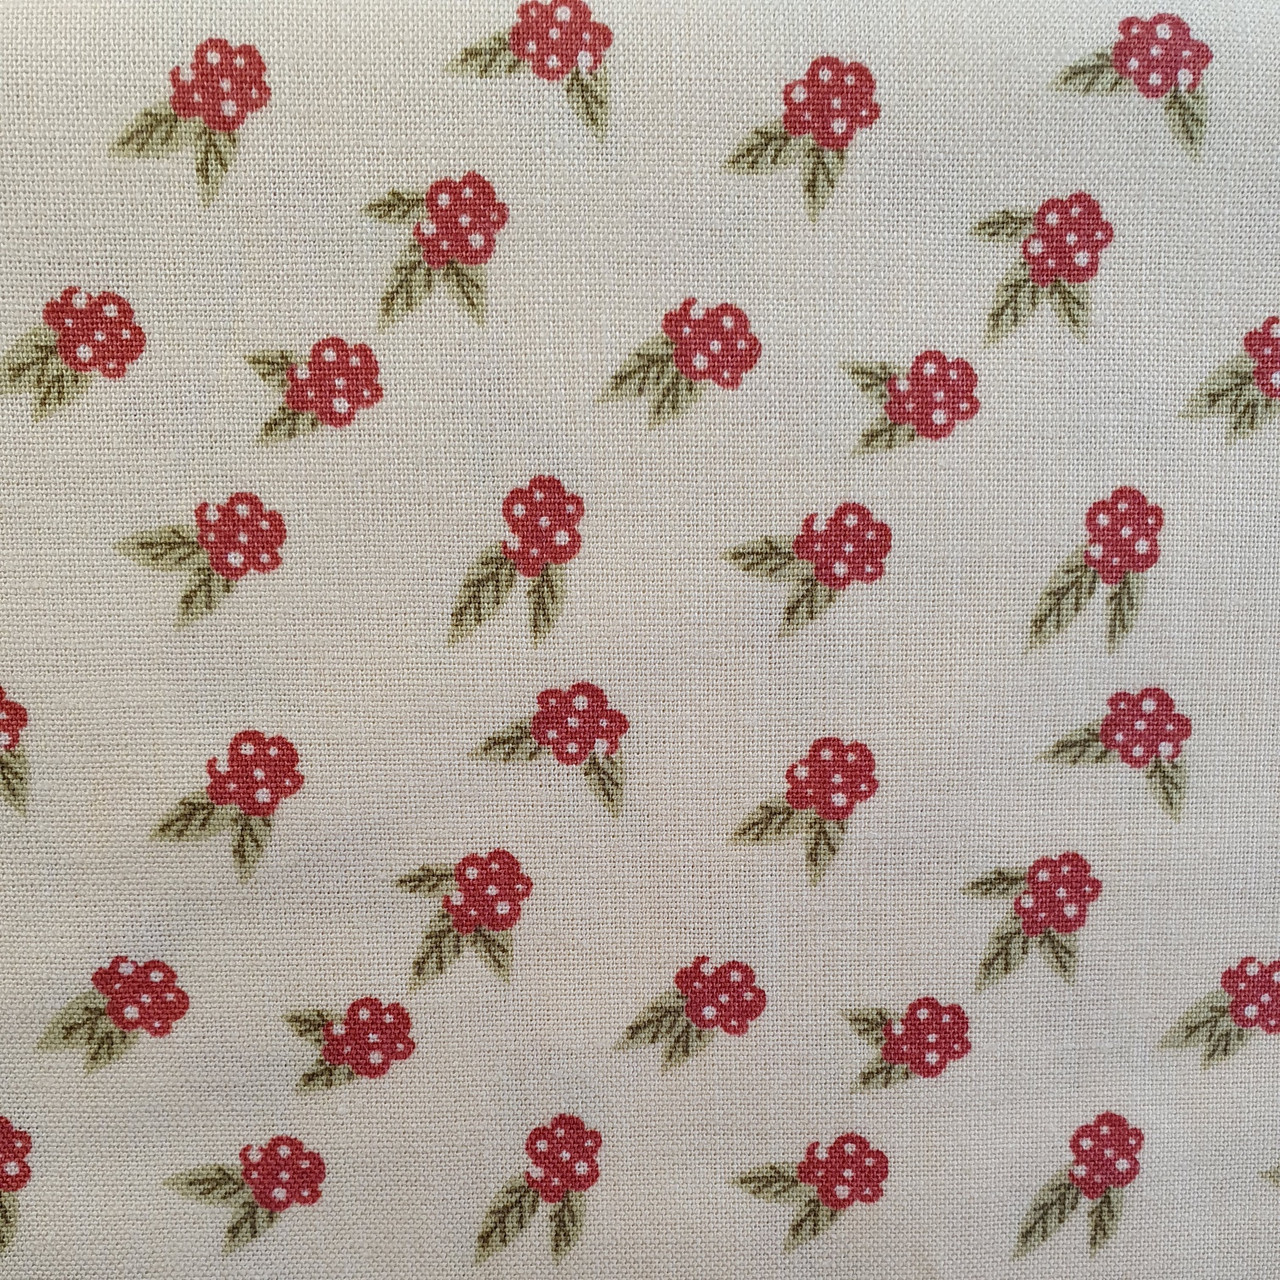 Berries on Cream Cotton Fabric, 150cm/60in wide, Sold Per HALF Metre